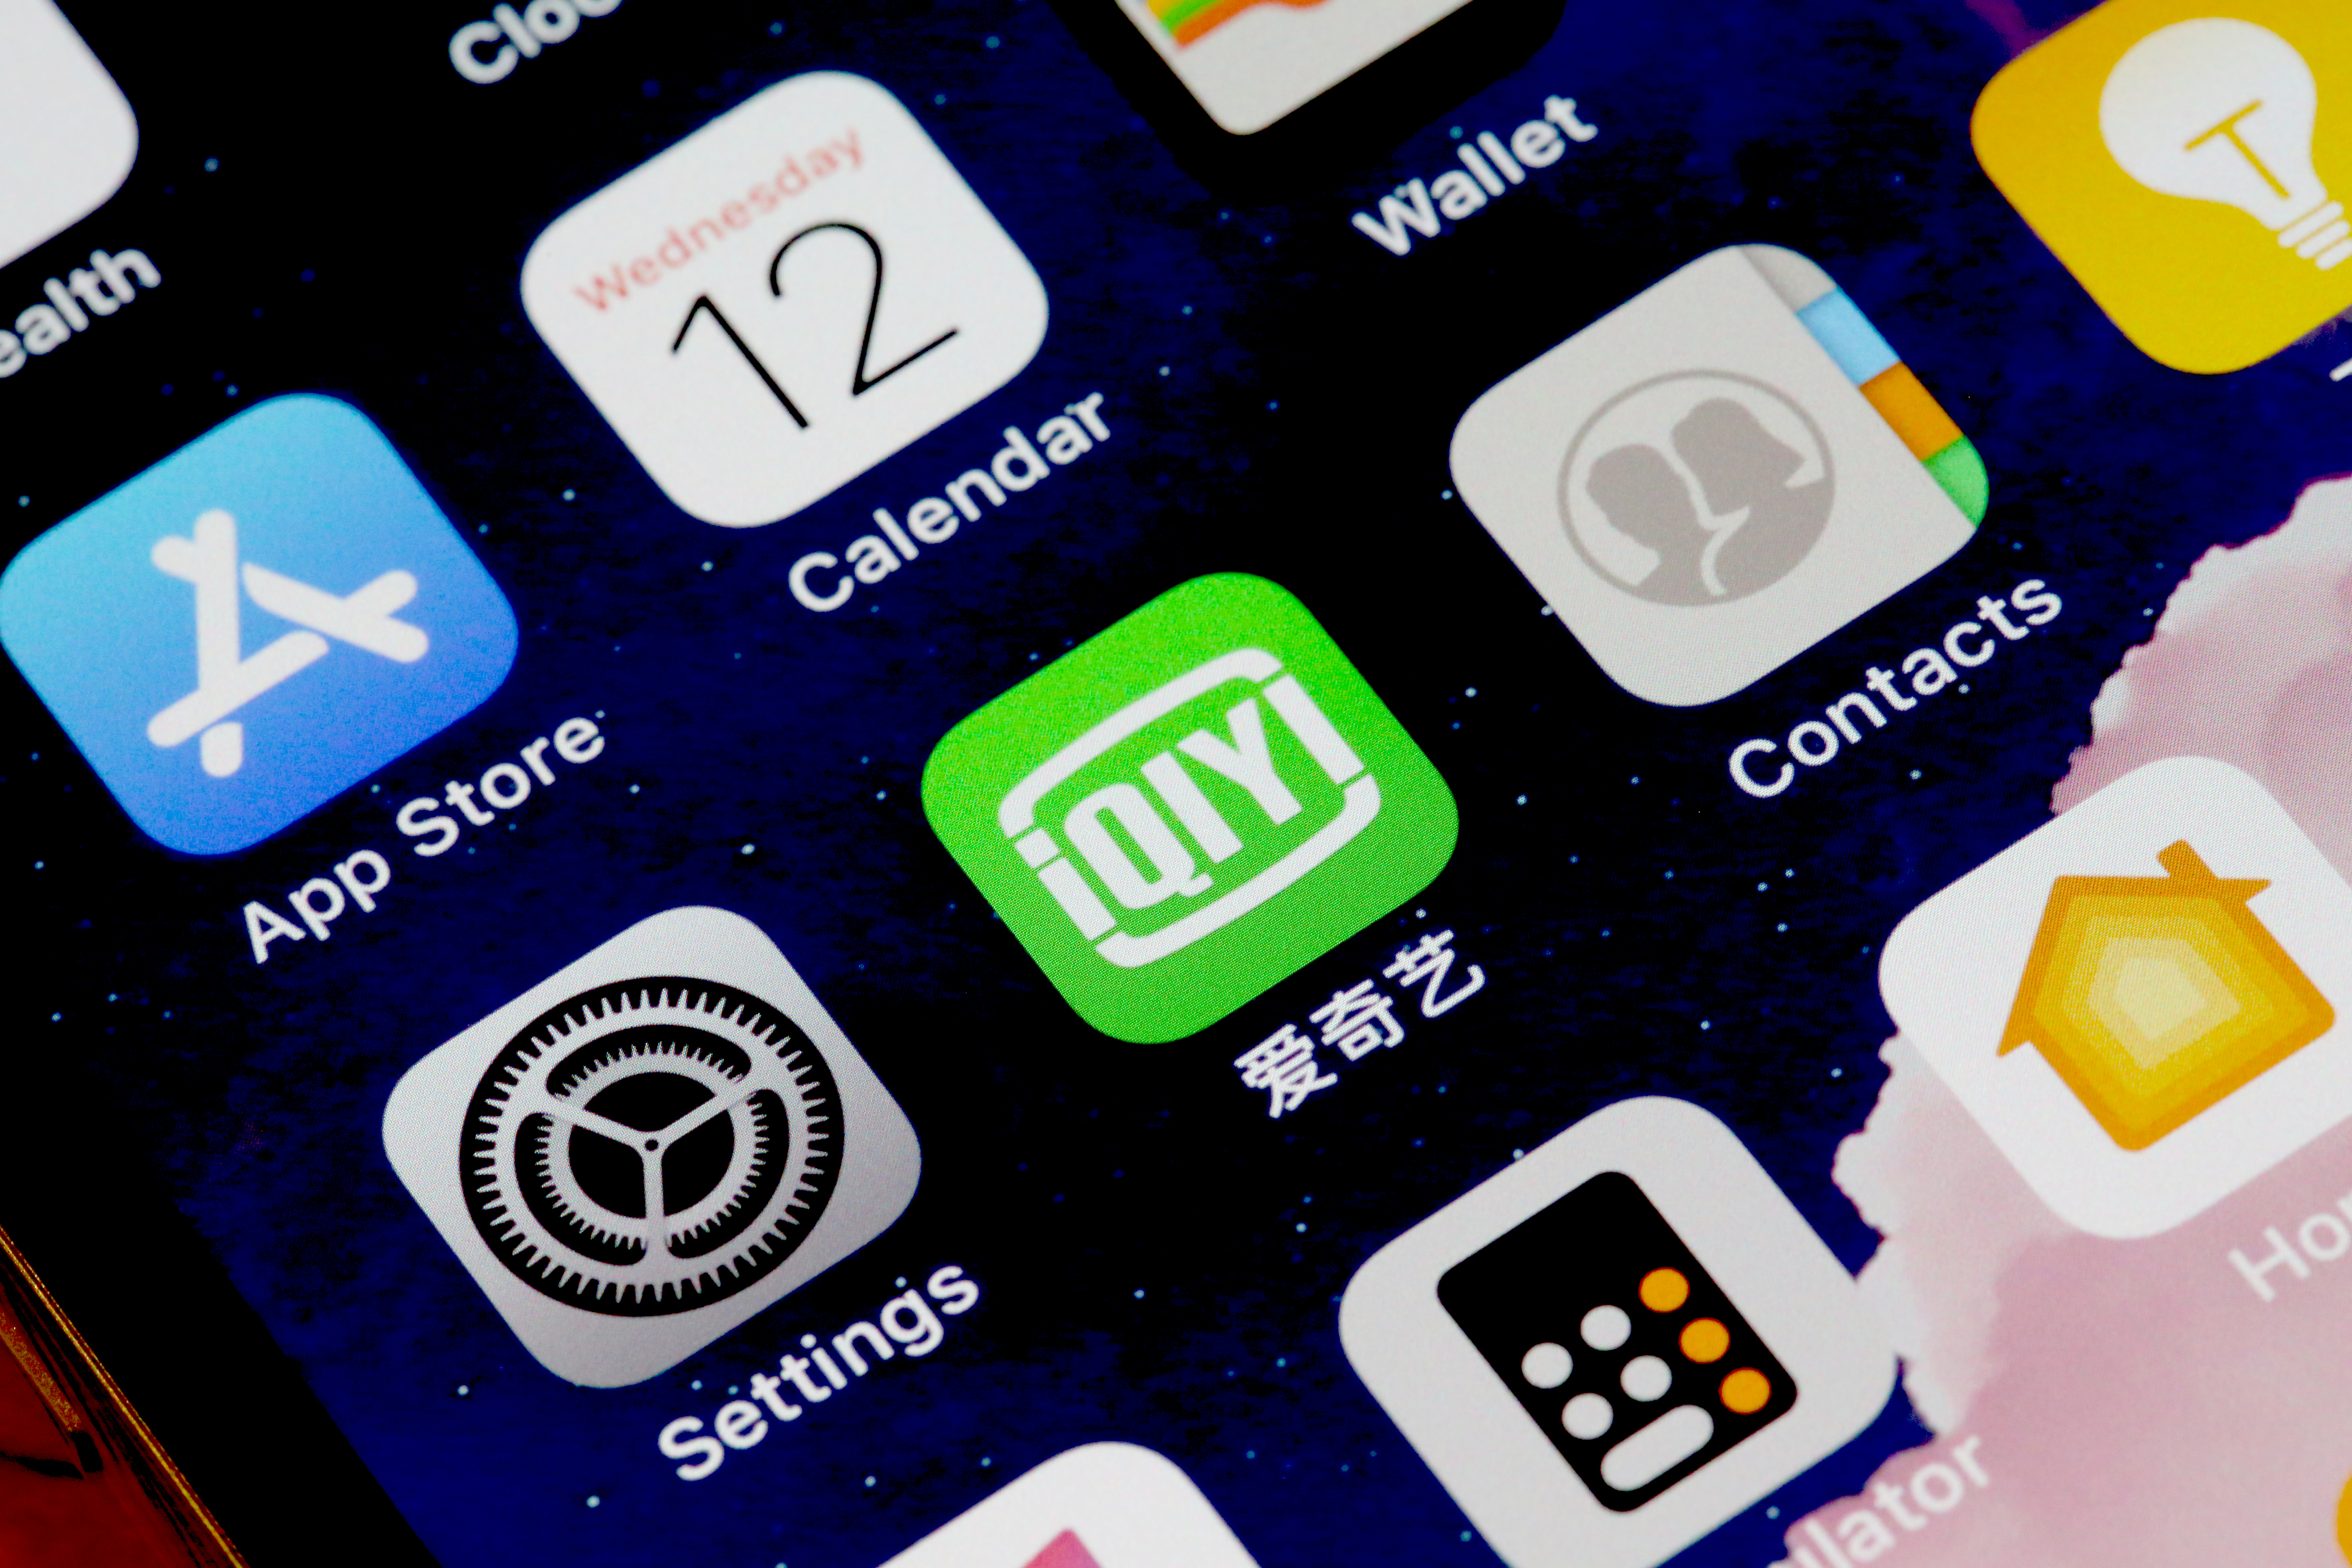 Chinese video platform iQiyi says it has 100 million paying users